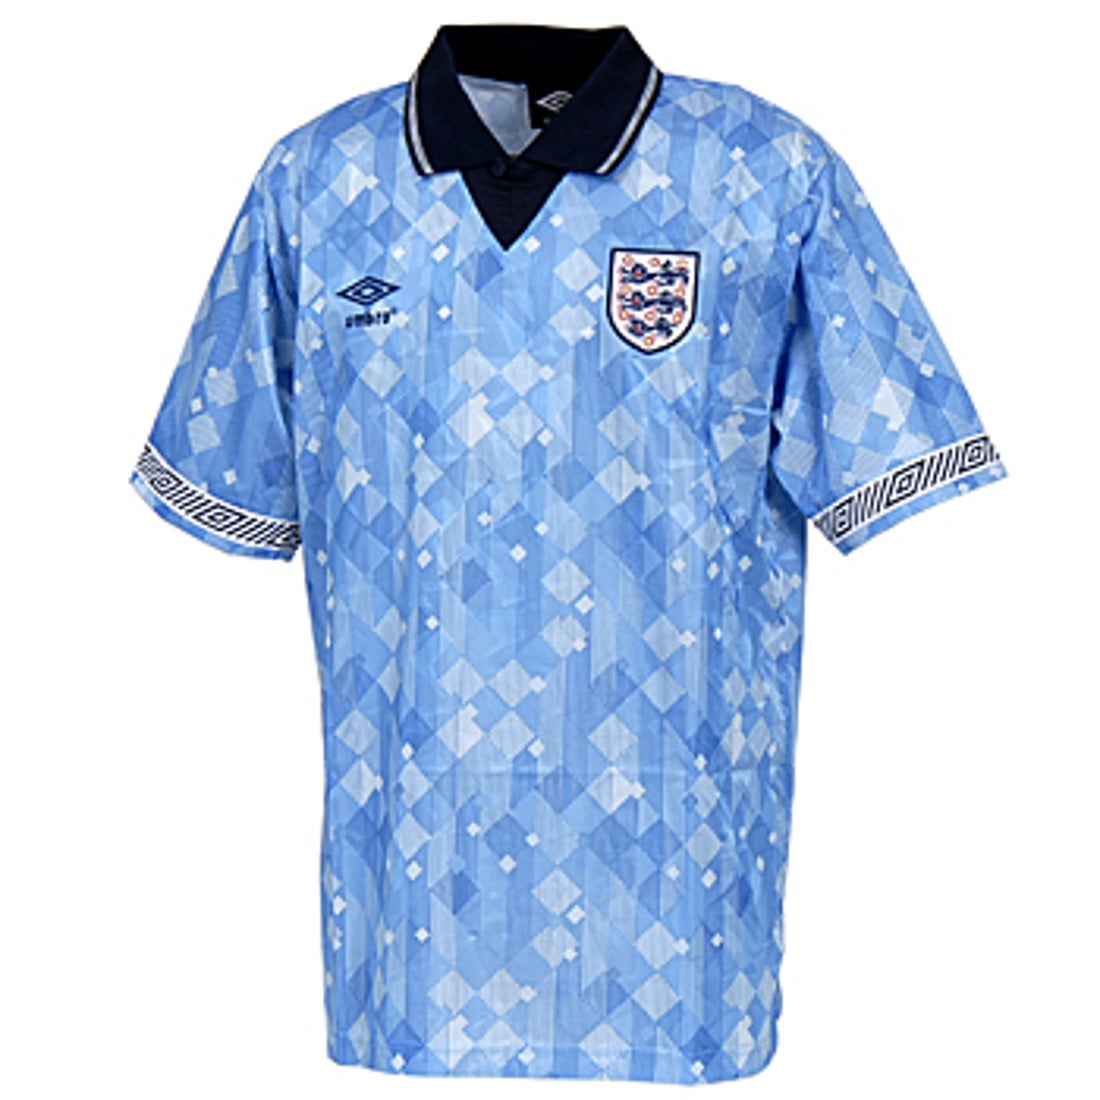 Umbro イングランド代表 1990 ｗ杯イタリア大会 ユニフォーム アウェイ 半袖 Gkシャツ 7440 7gl 代表 クラブユニフォーム サッカーショップ Sws